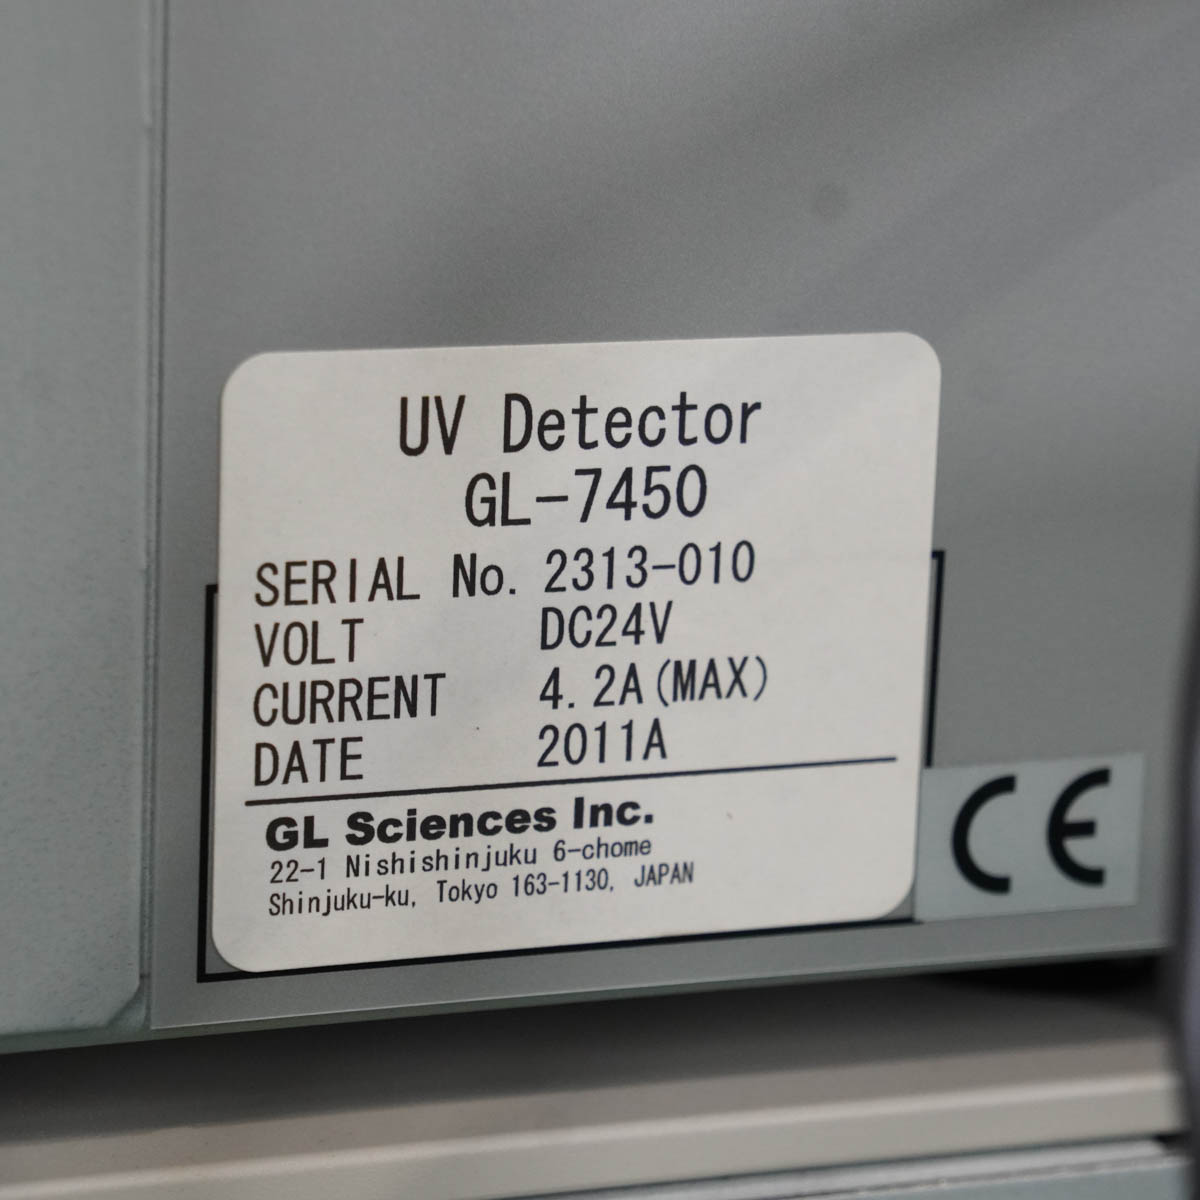 [DW]USED 8日保証 セット BIO-RAD 1706 1350 HPLC 液クロ UV VIS MONITOR PUMP 液体クロマトグラフ [ST04523-0028] - 2